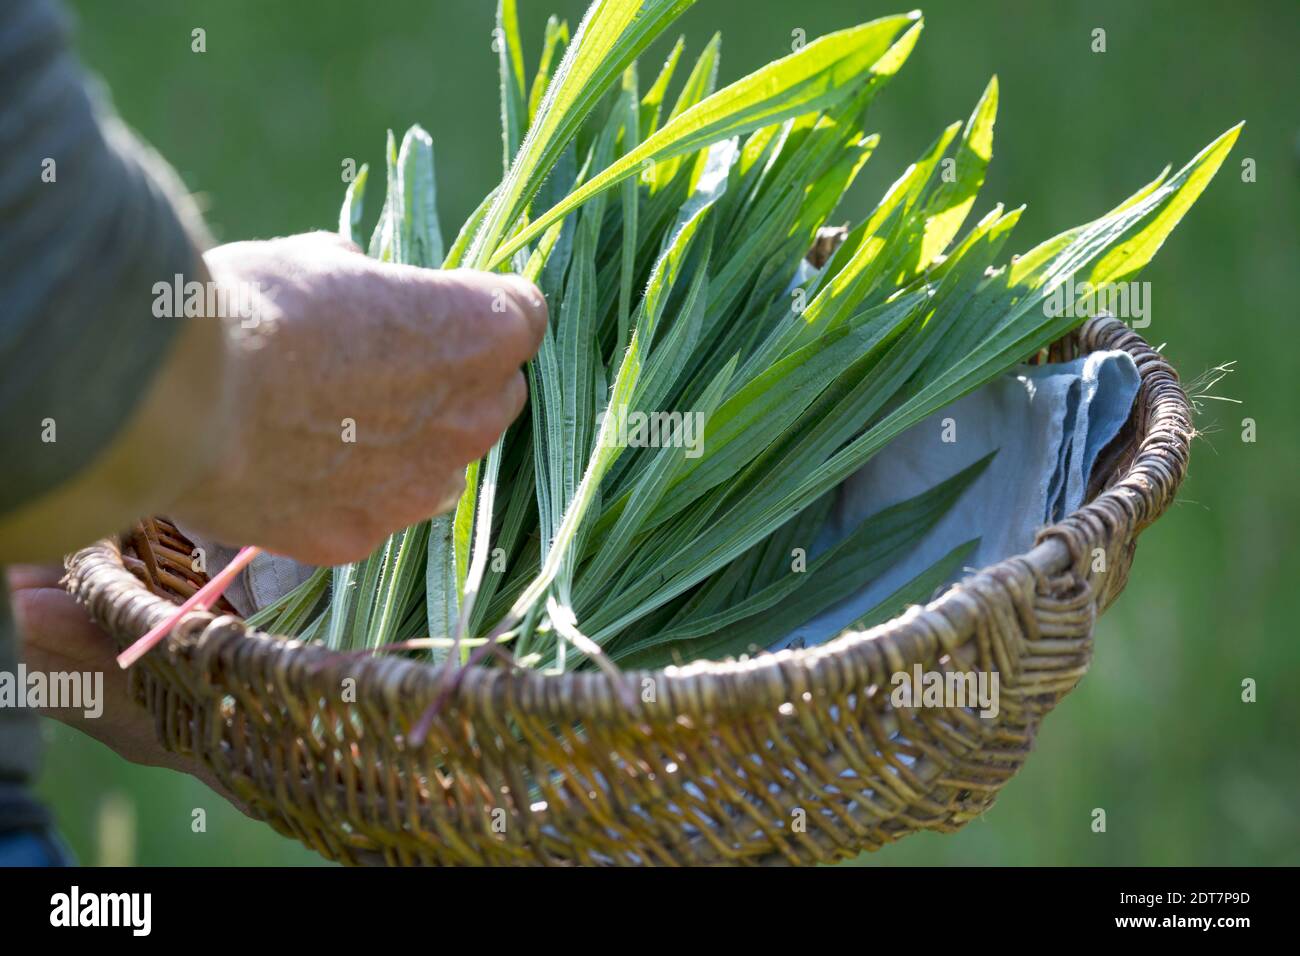 buckhorn plantain, English plantain, ribwort plantain, rib grass, ripple grass (Plantago lanceolata), harvesting buckhorn plantain, Germany Stock Photo